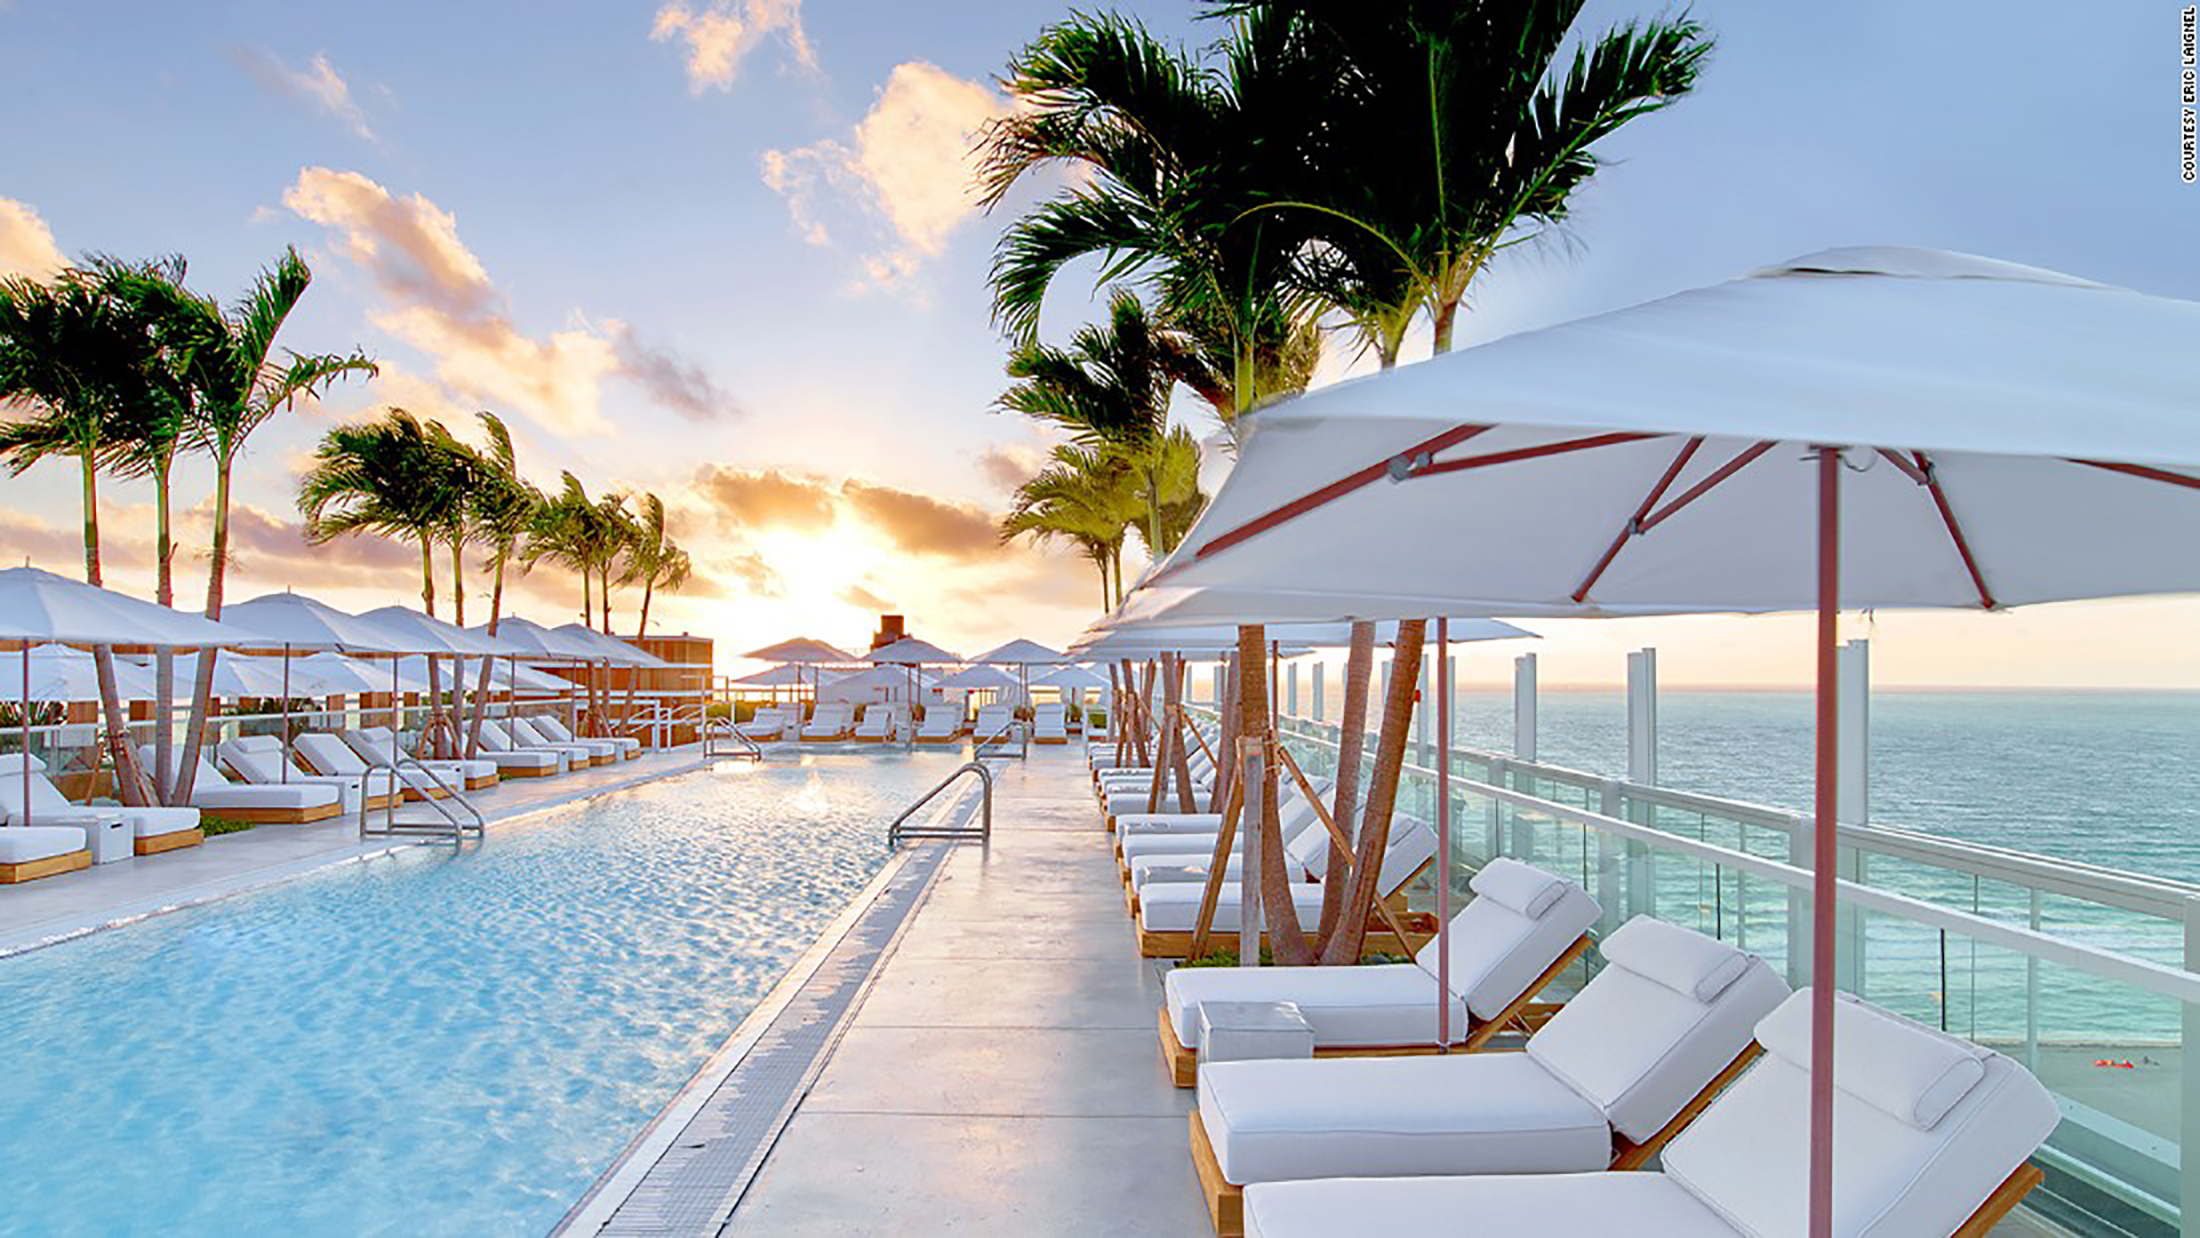 1 Hotel & Homes South Beach | 1 Hotel & Homes | 1 Hotel & Homes Miami